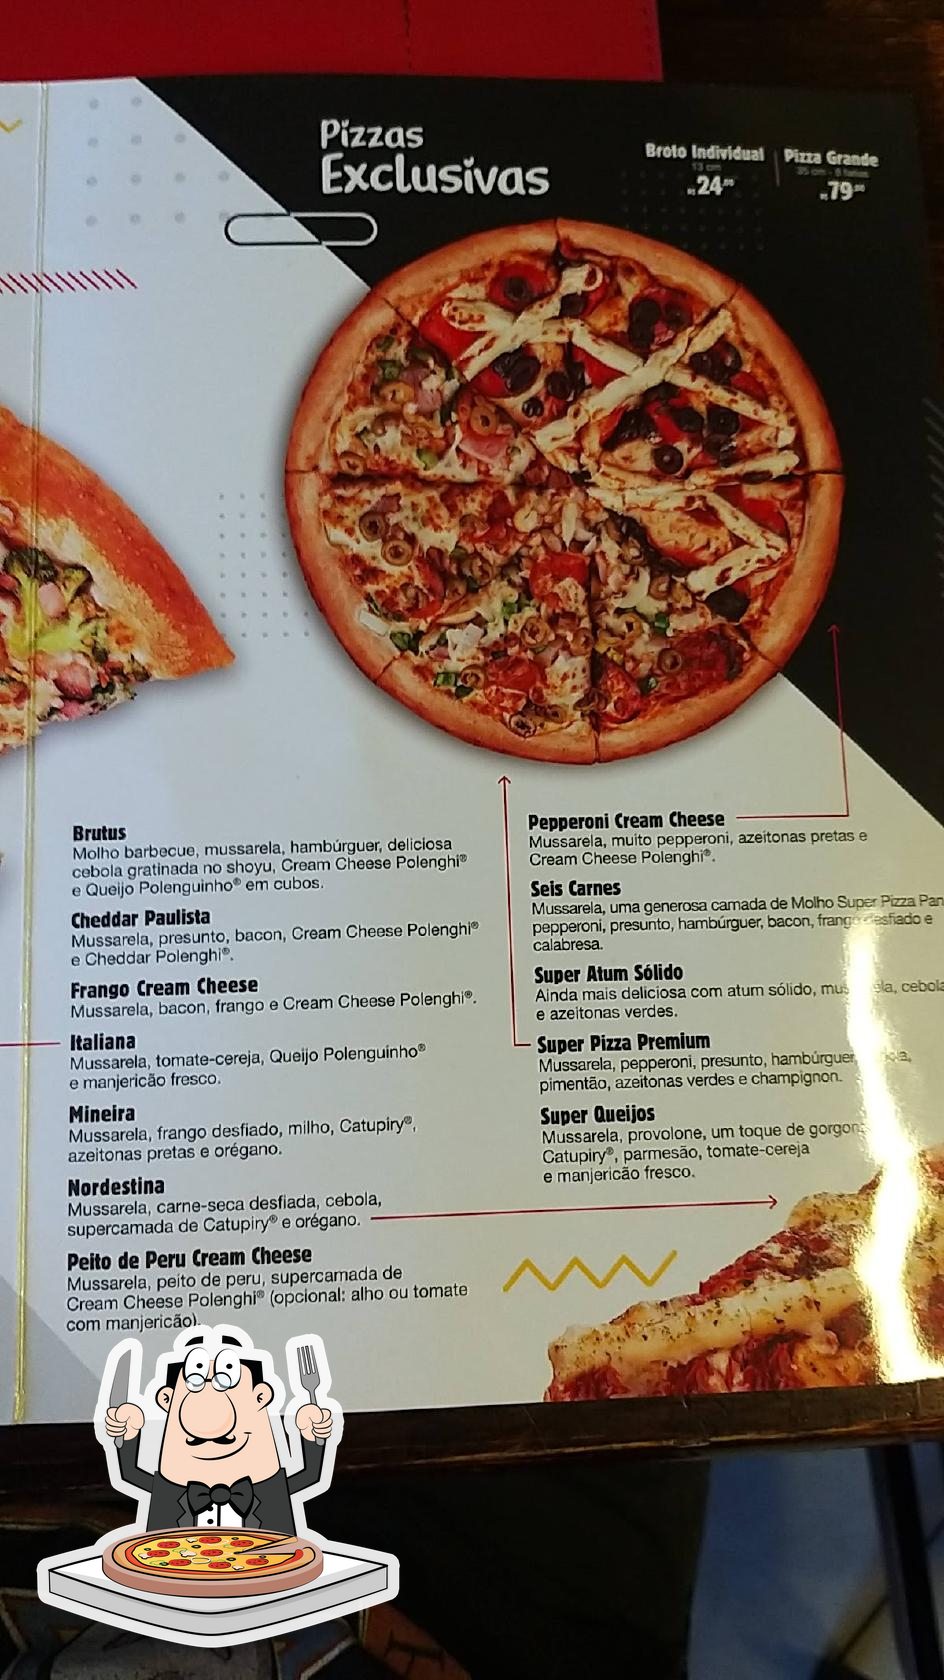 Napolitana Grande: Super Pizza Pan - Mogi das Cruzes